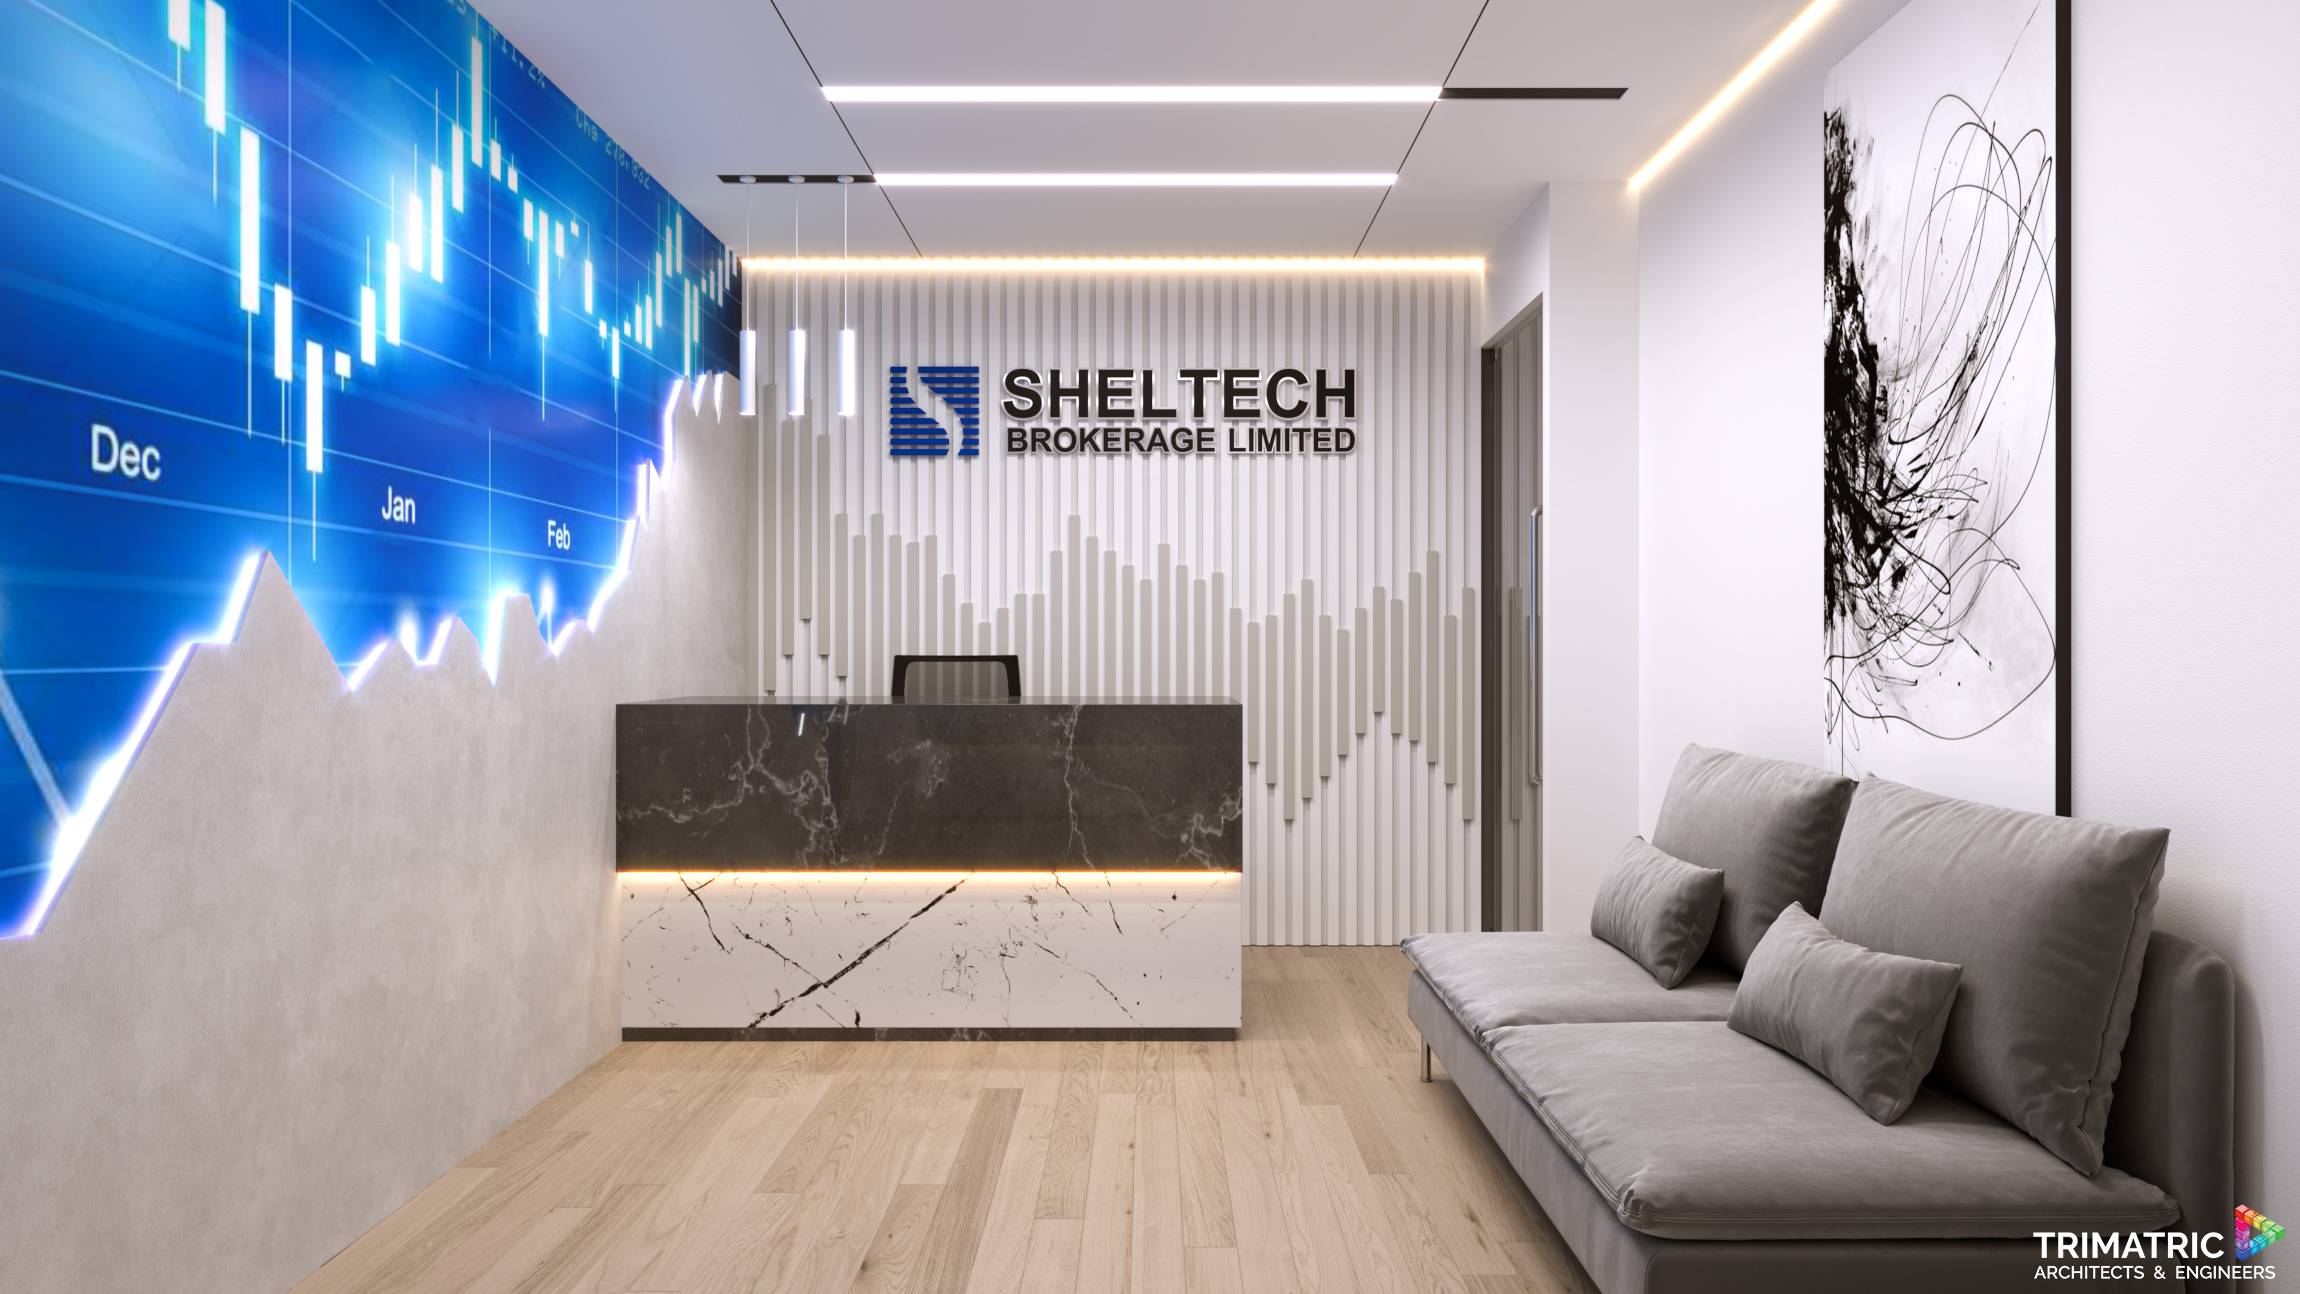 Sheltech Brokerage Limited